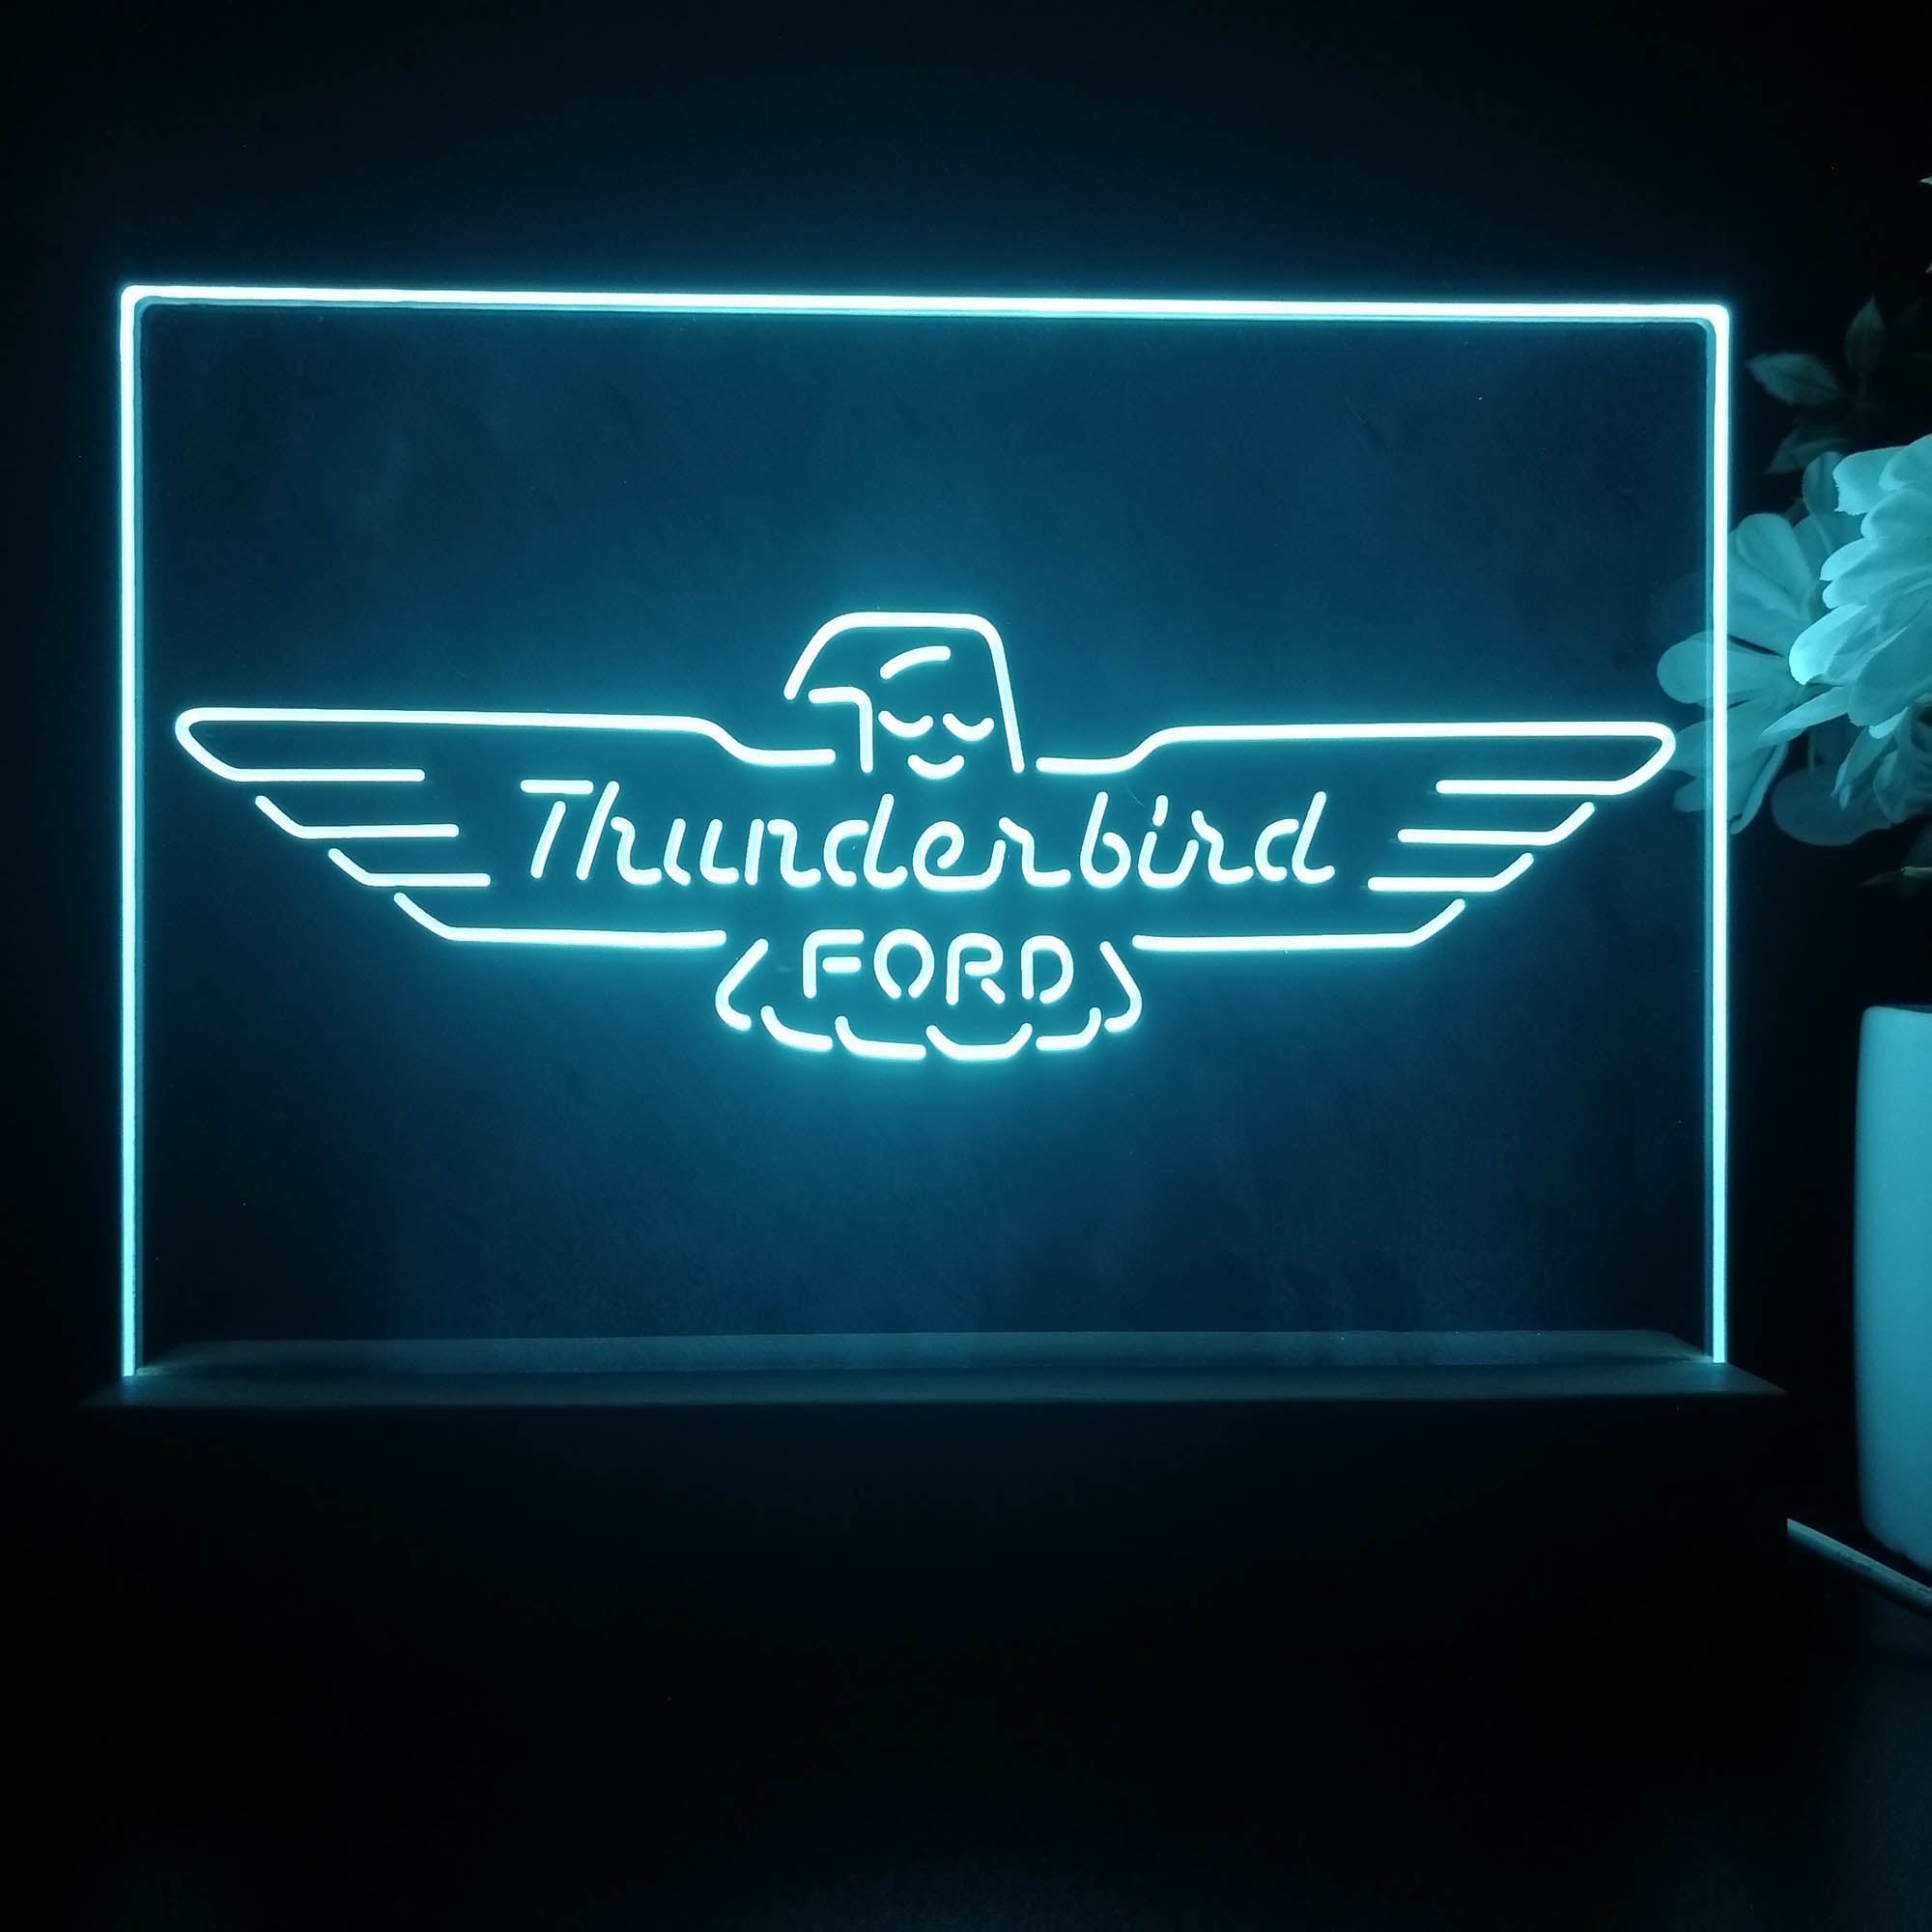 Ford Thunderbird 3D Illusion Night Light Desk Lamp